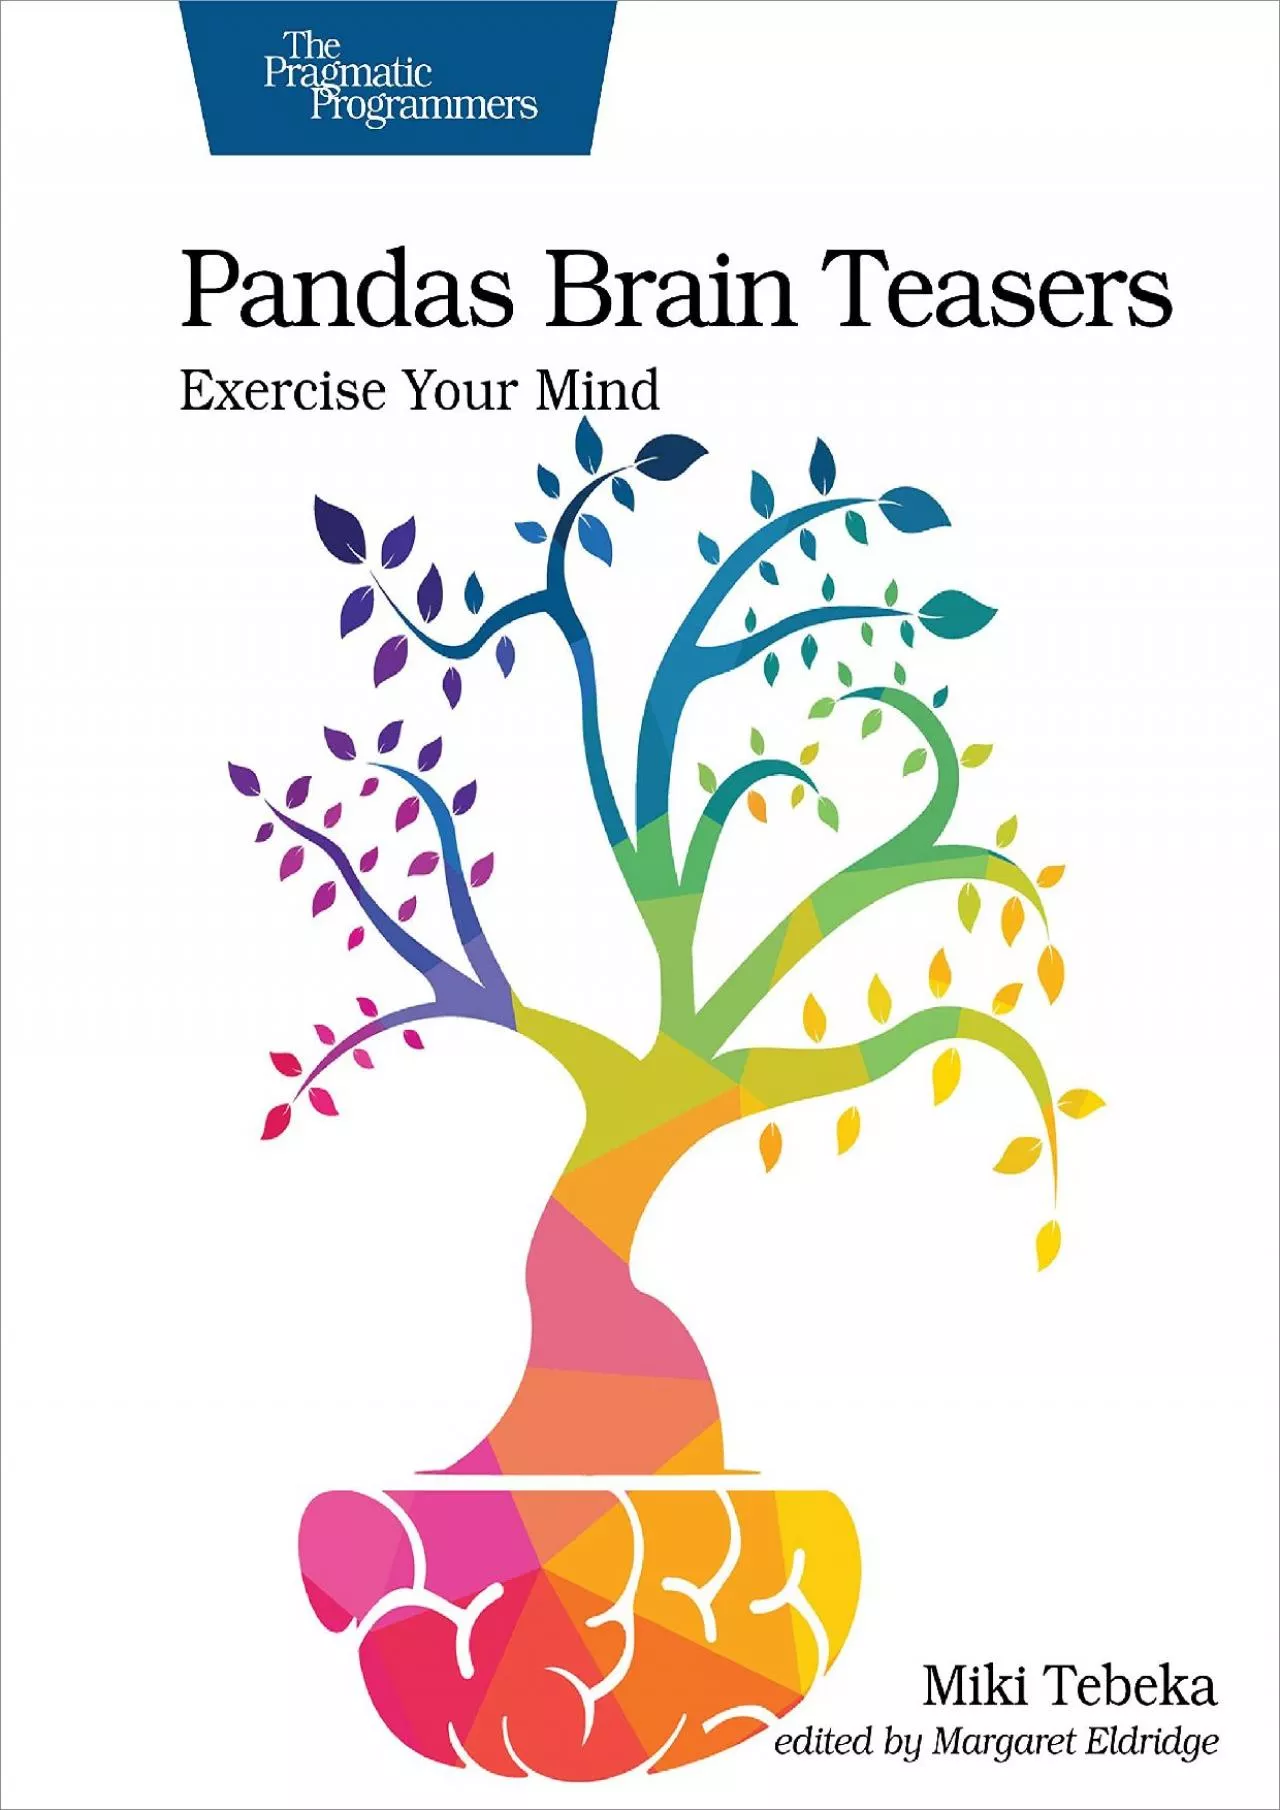 [READING BOOK]-Pandas Brain Teasers